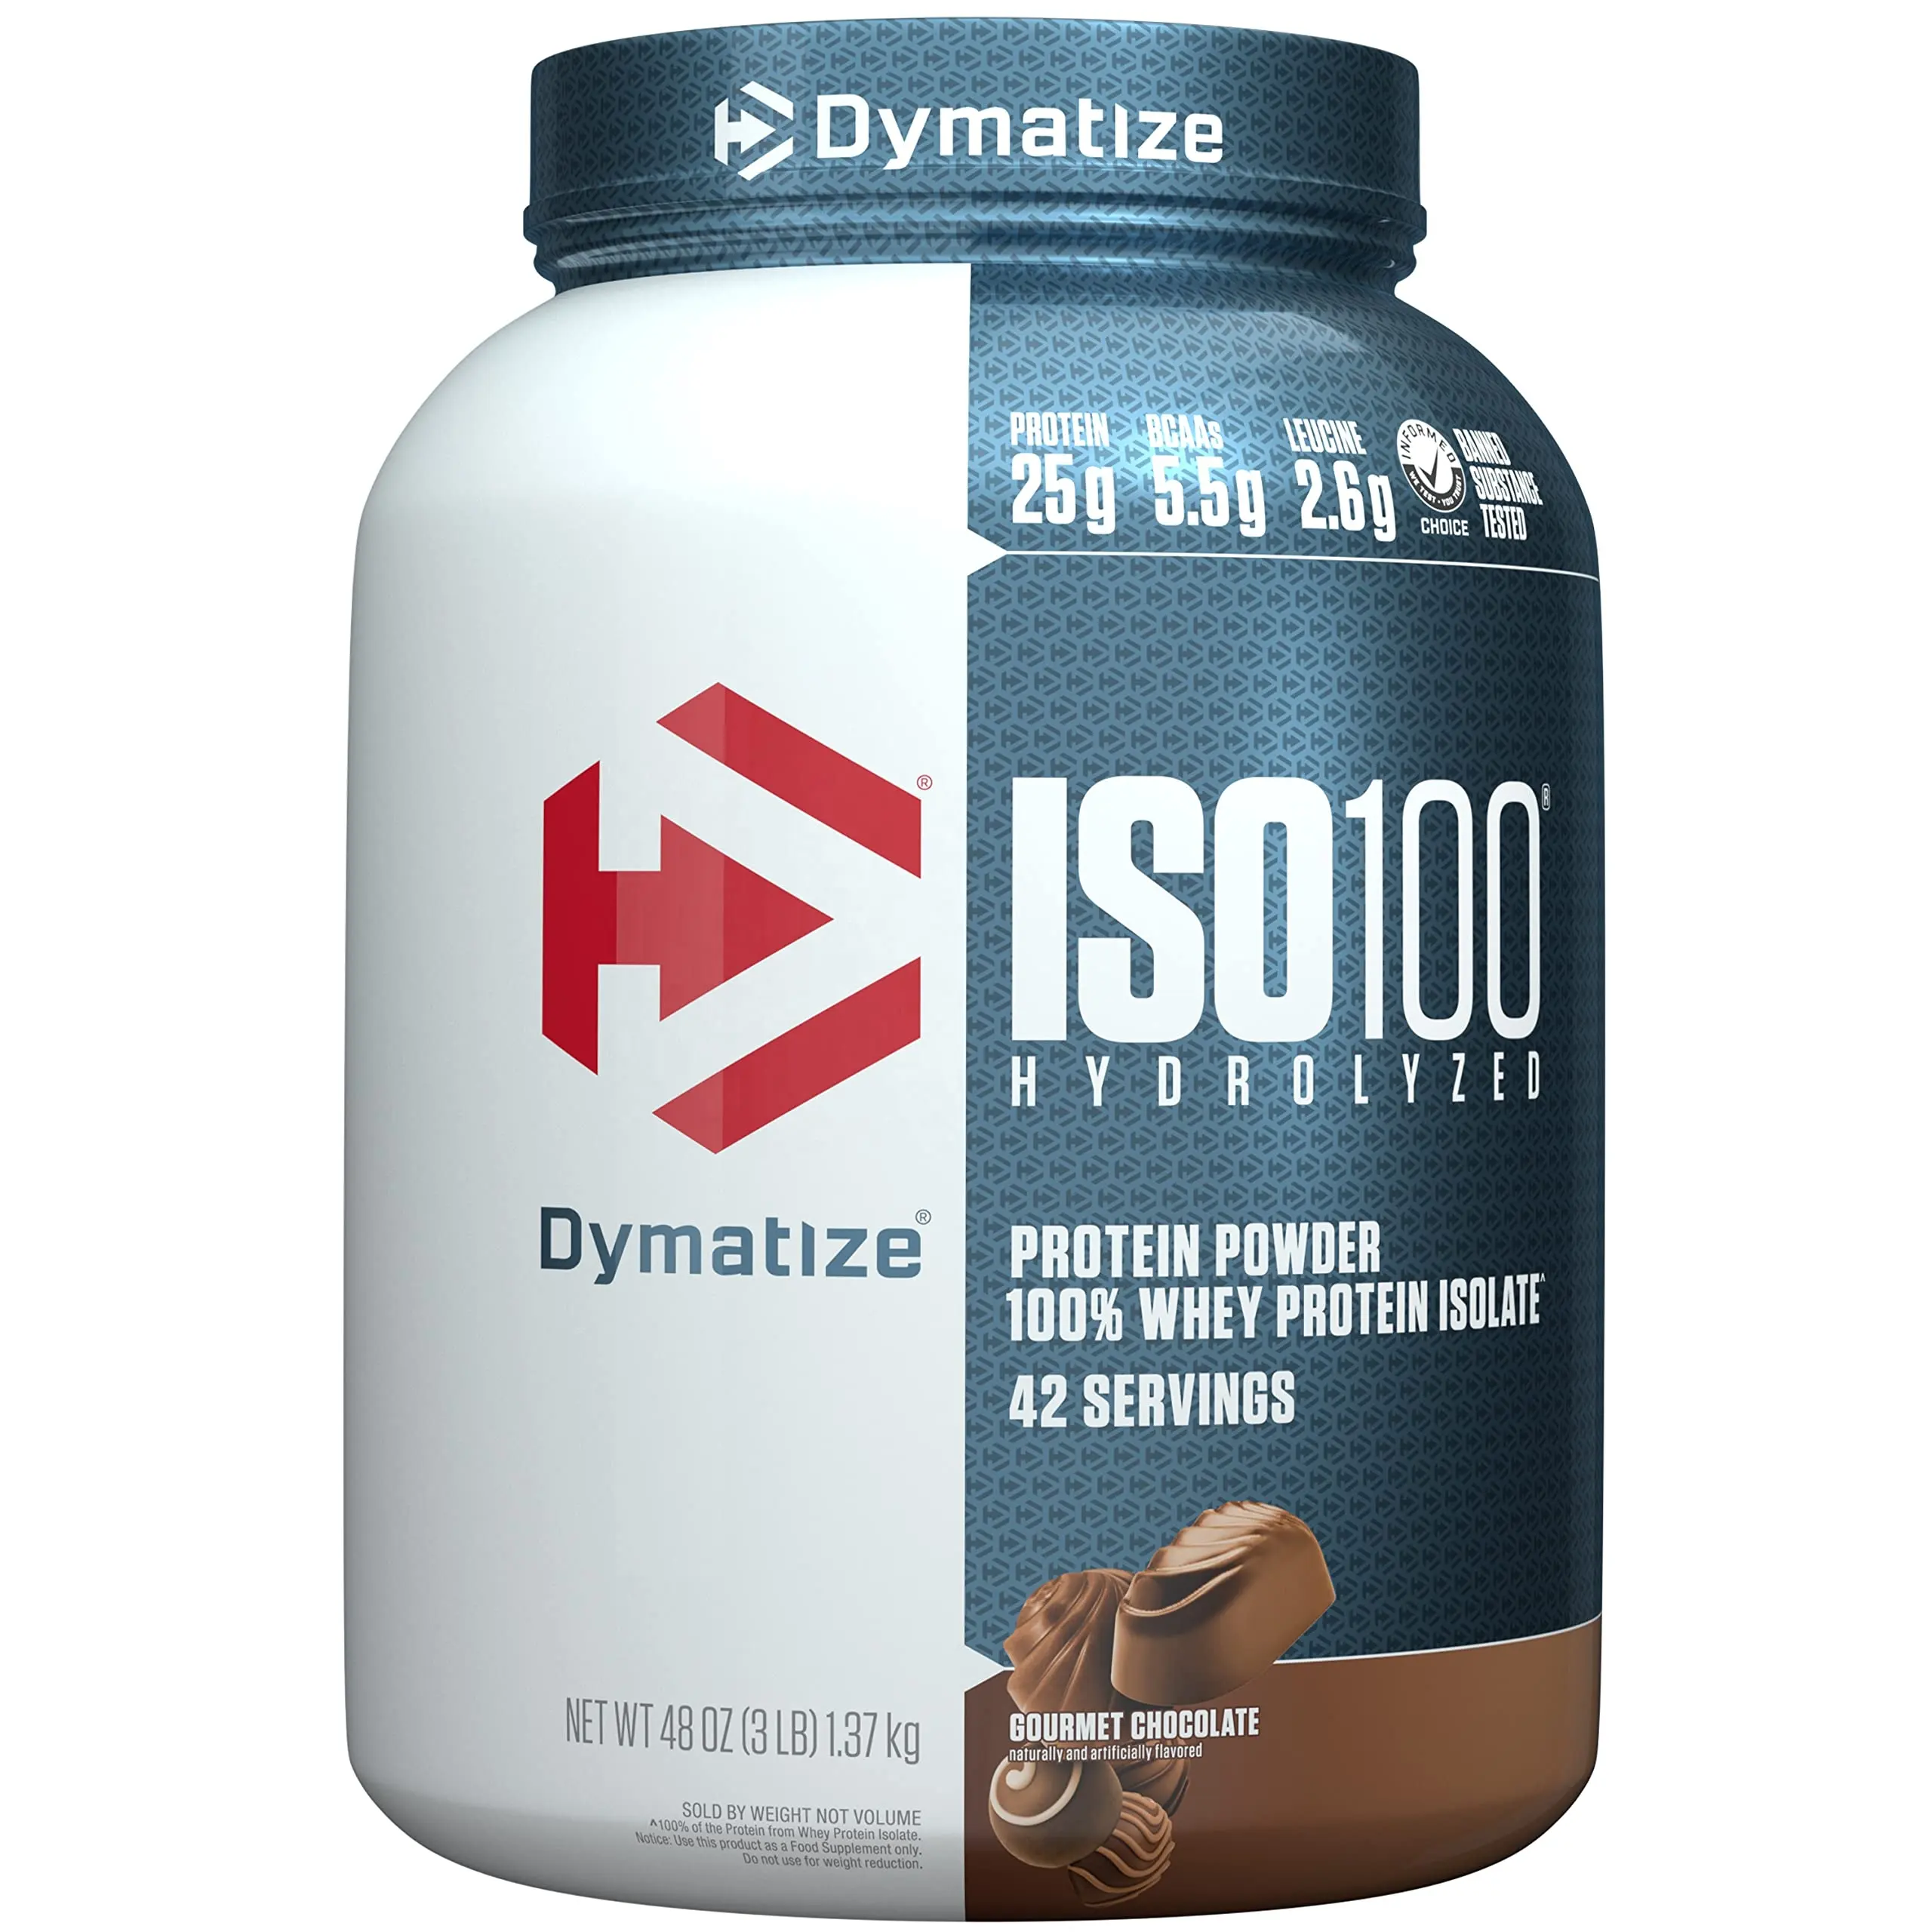 Polvo de proteína hidrolizada, proteína aislante de suero de leche al 100%, venta al por mayor, Dymatize ISO100